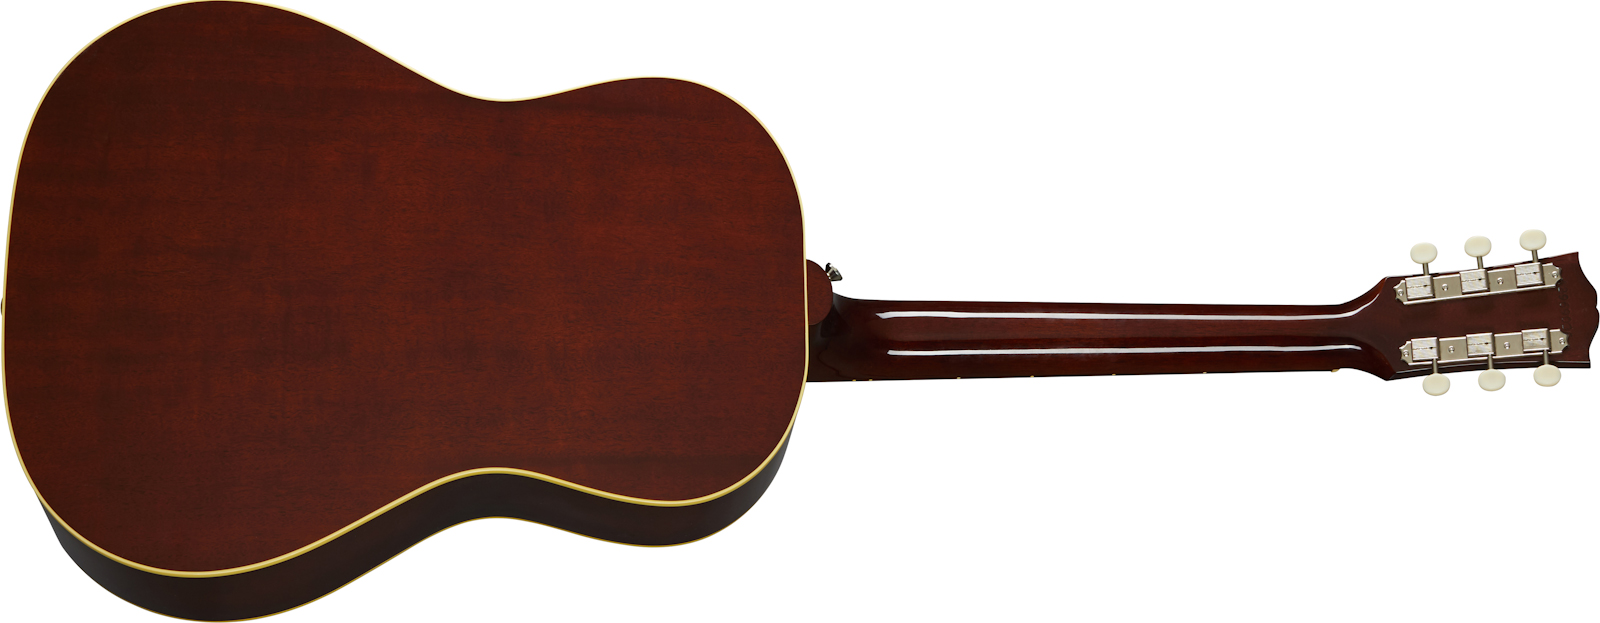 Gibson 50s Lg-2 2020 Auditorium Epicea Acajou Rw - Vintage Sunburst - Electro acoustic guitar - Variation 1